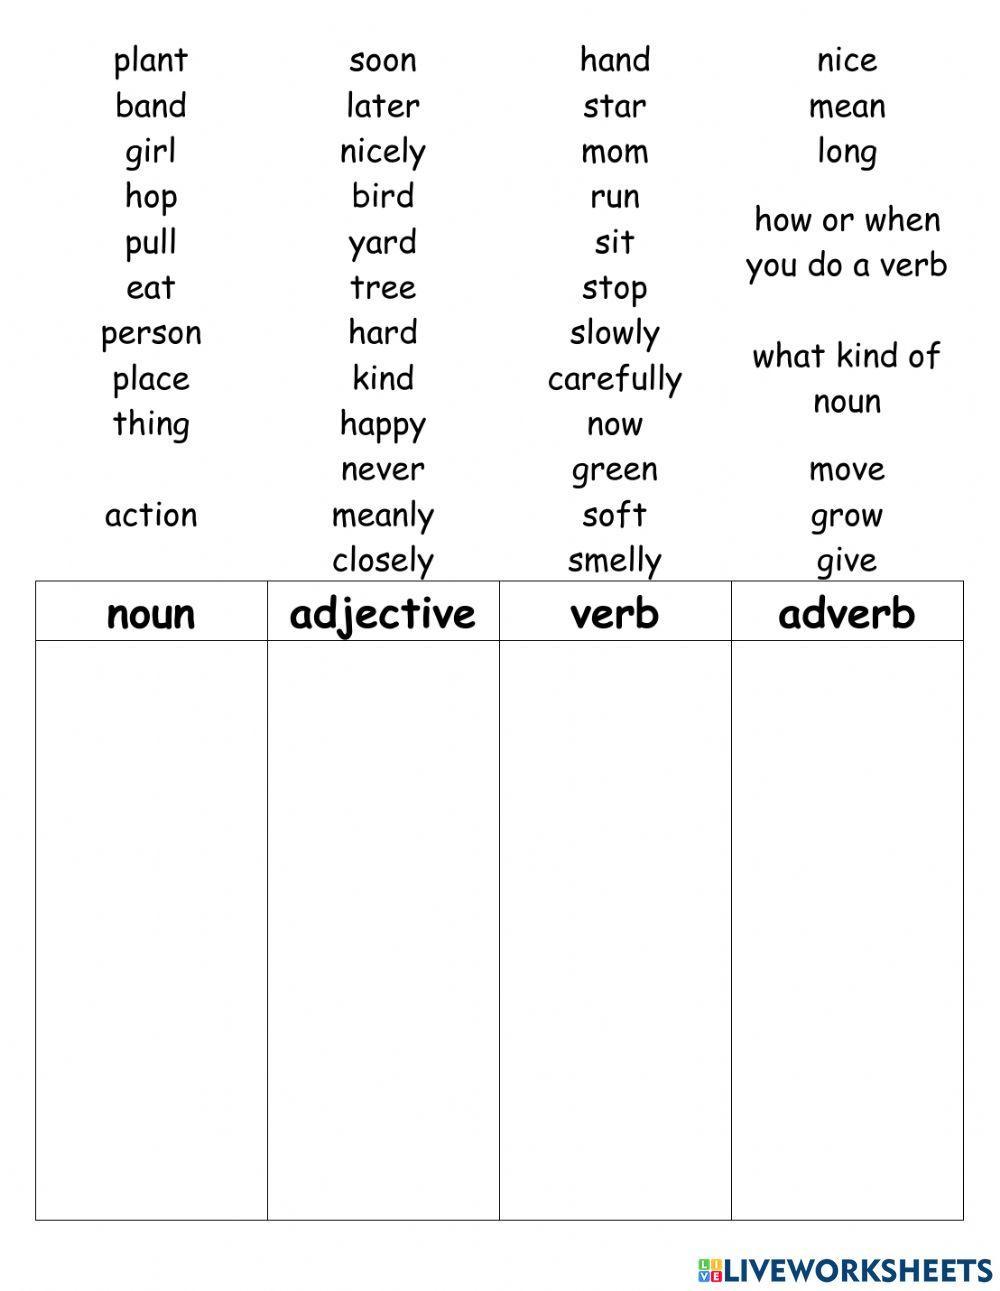 Match Nouns, Verbs, Adverbs, and Adjectives